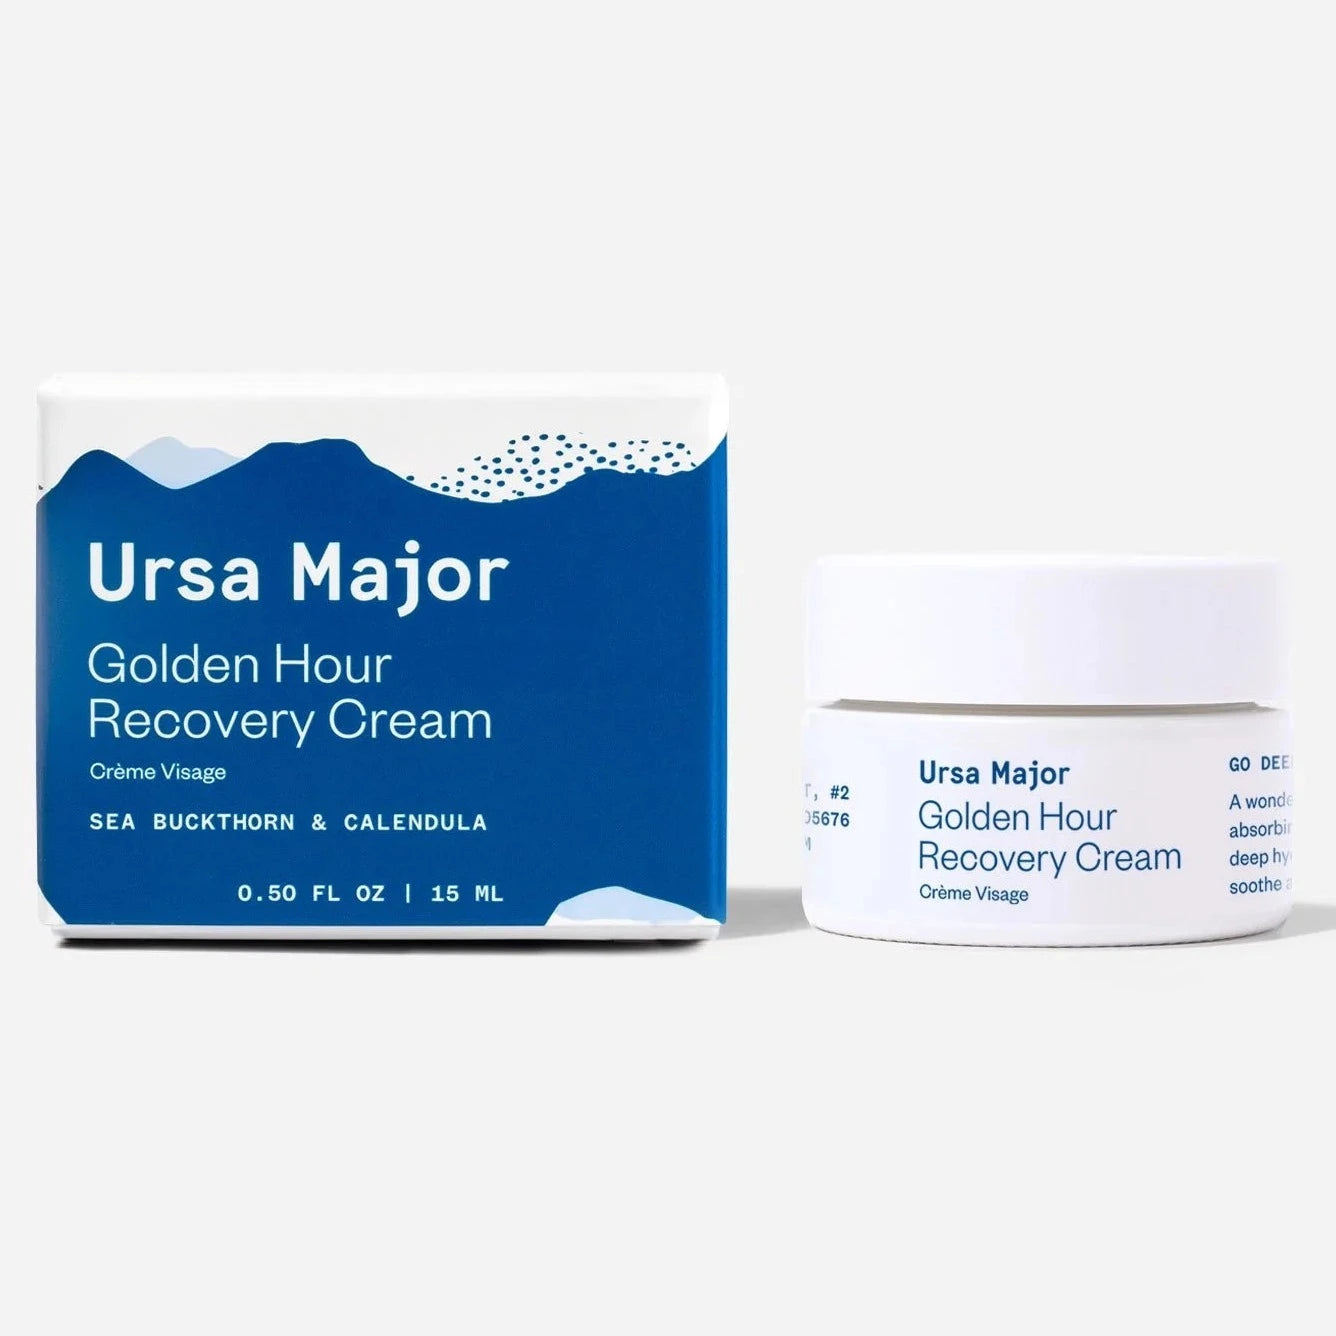 Ursa Major Golden Hour Recovery Cream Blue Packaging